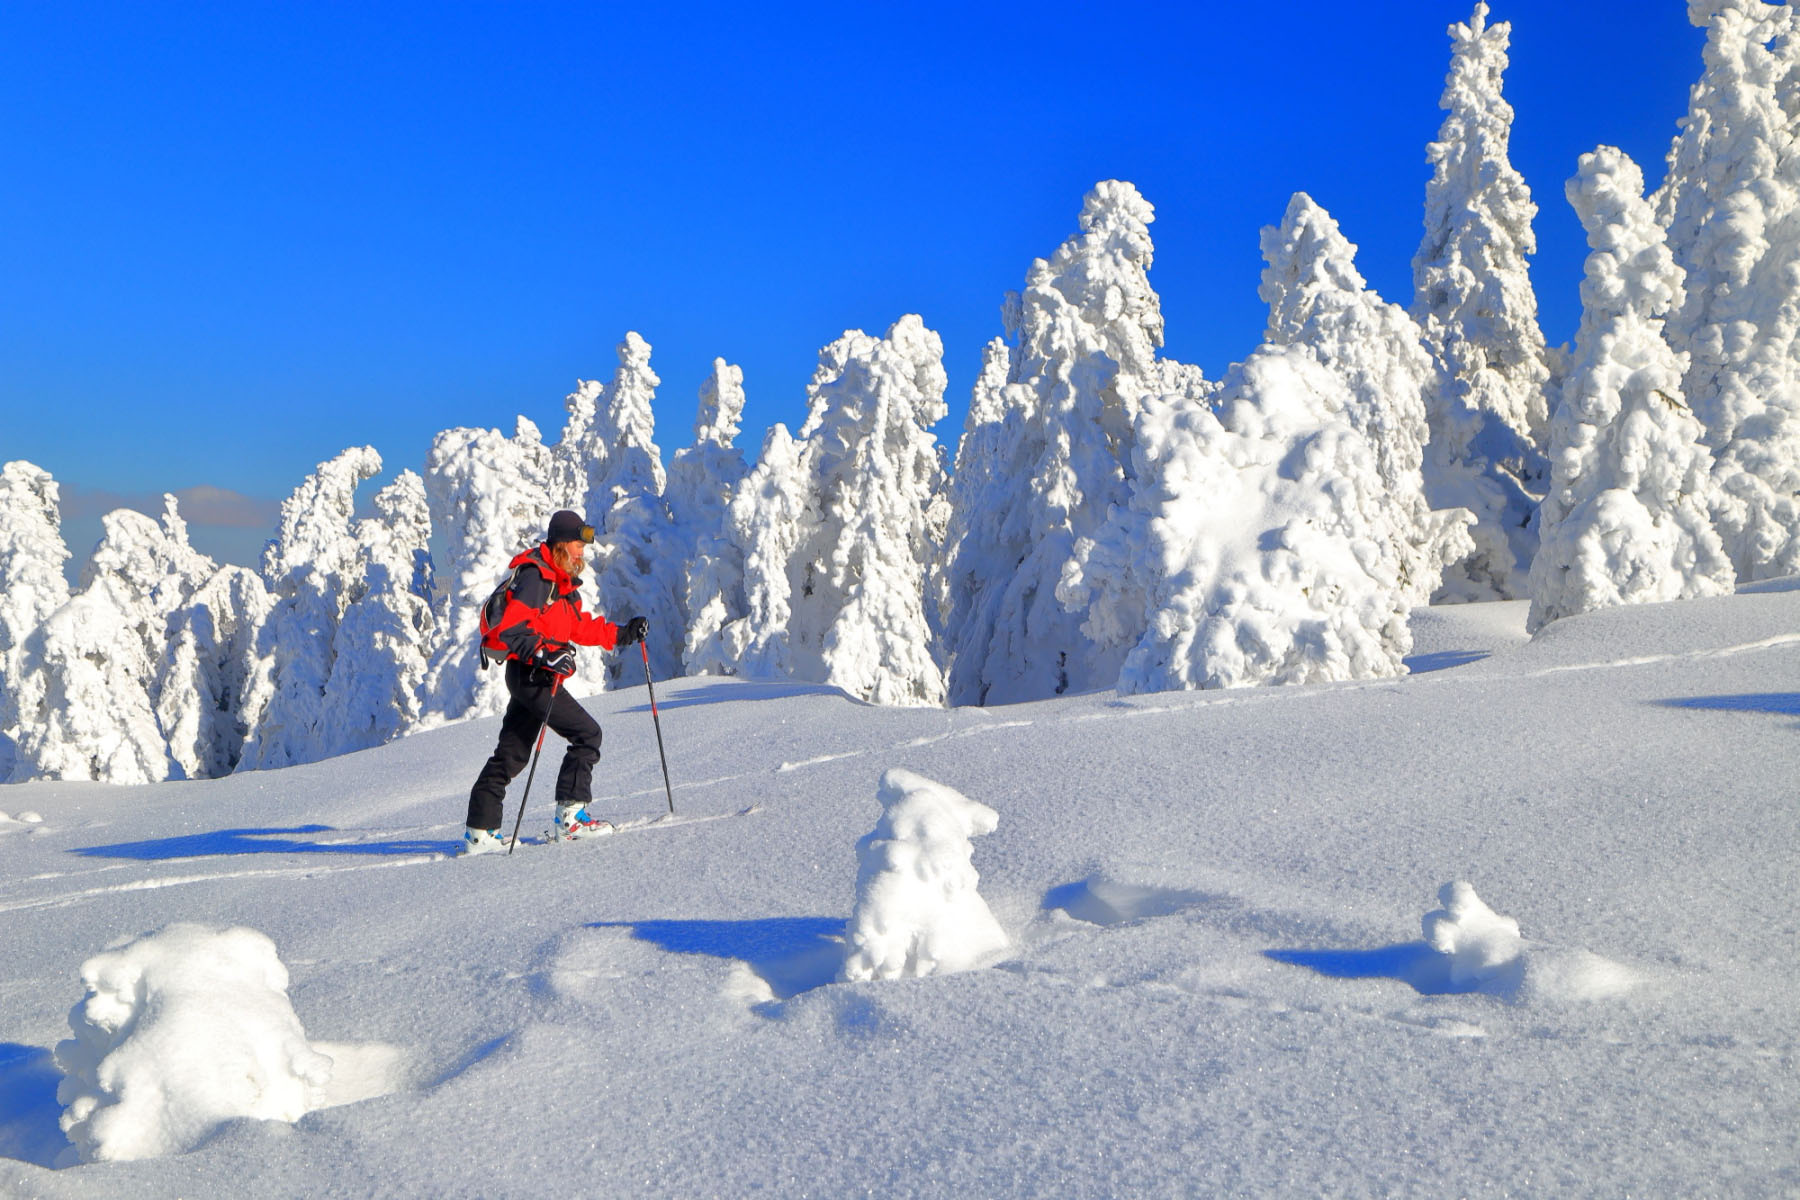 How to choose gear for a beginner ski tourer